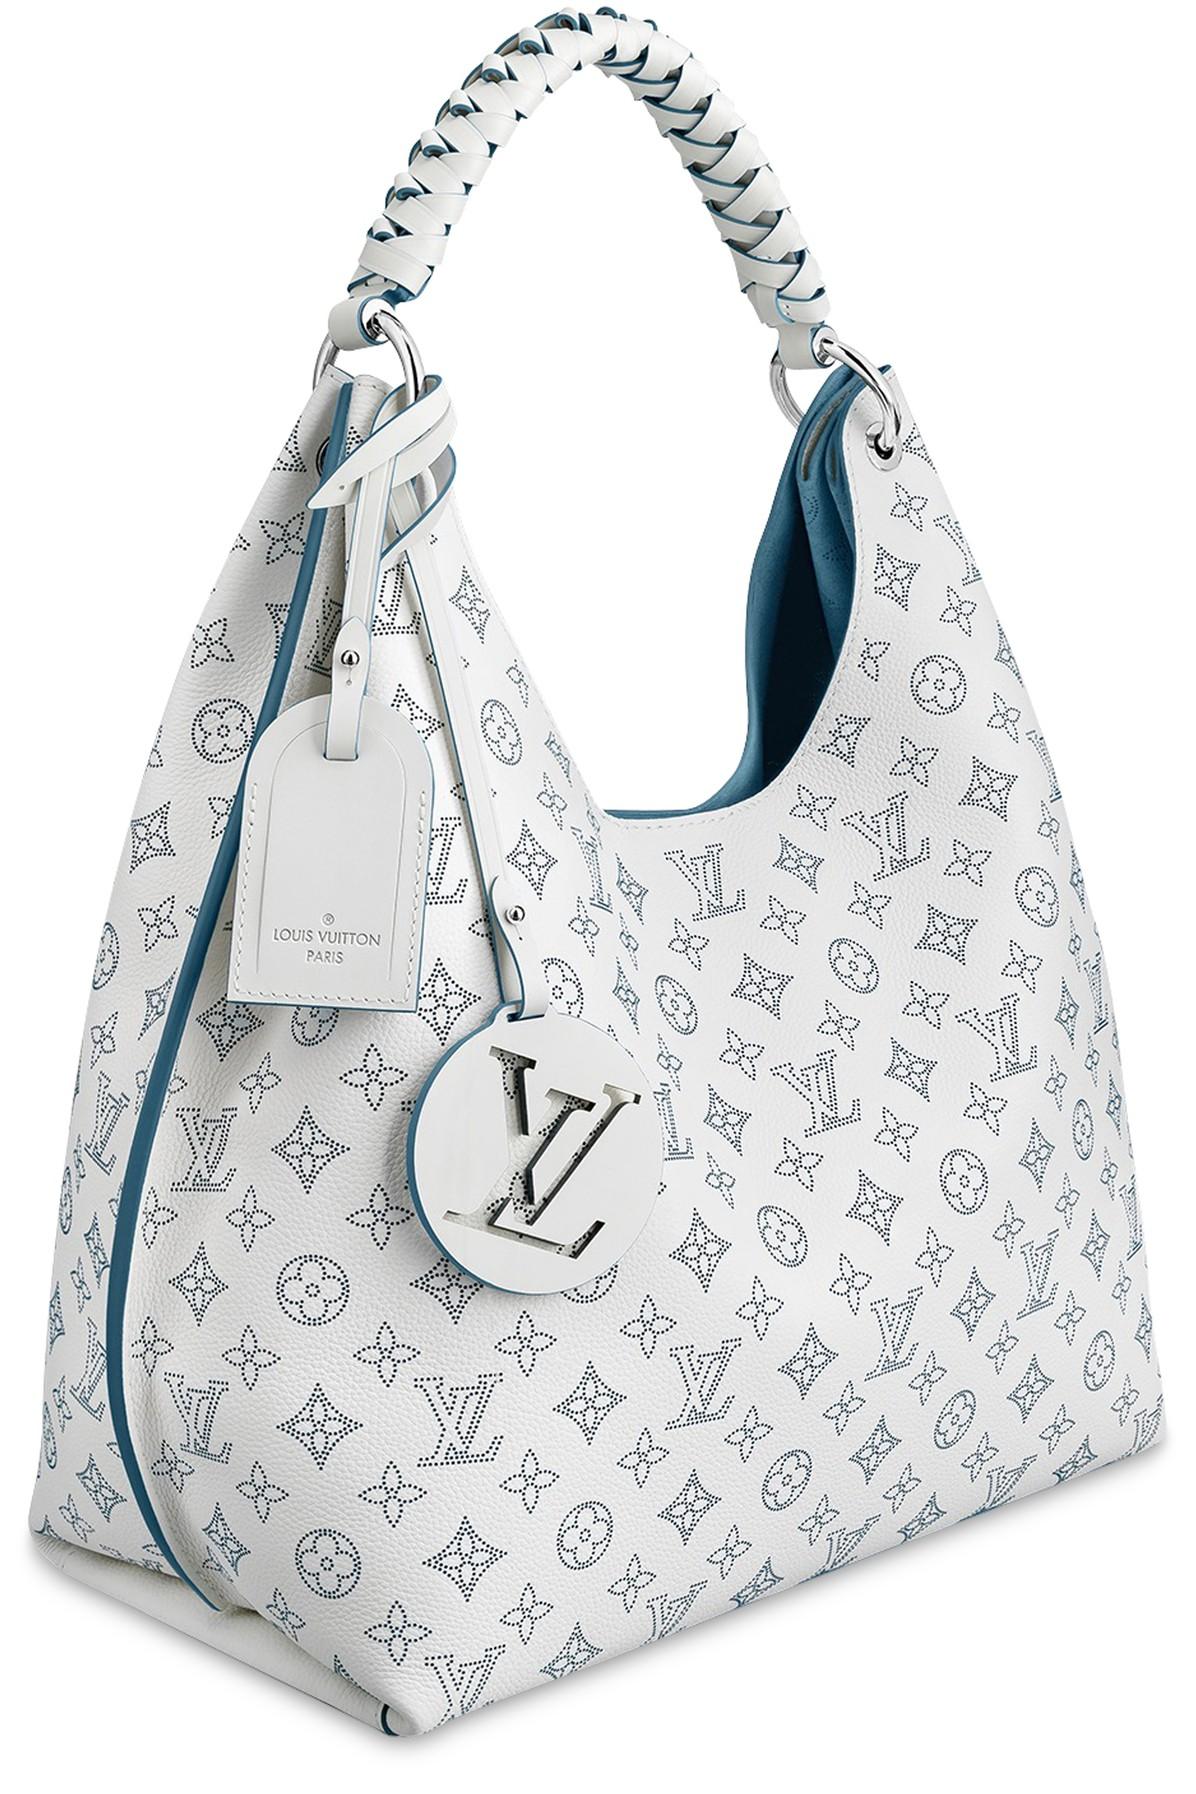 Carmel bag - LOUIS VUITTON